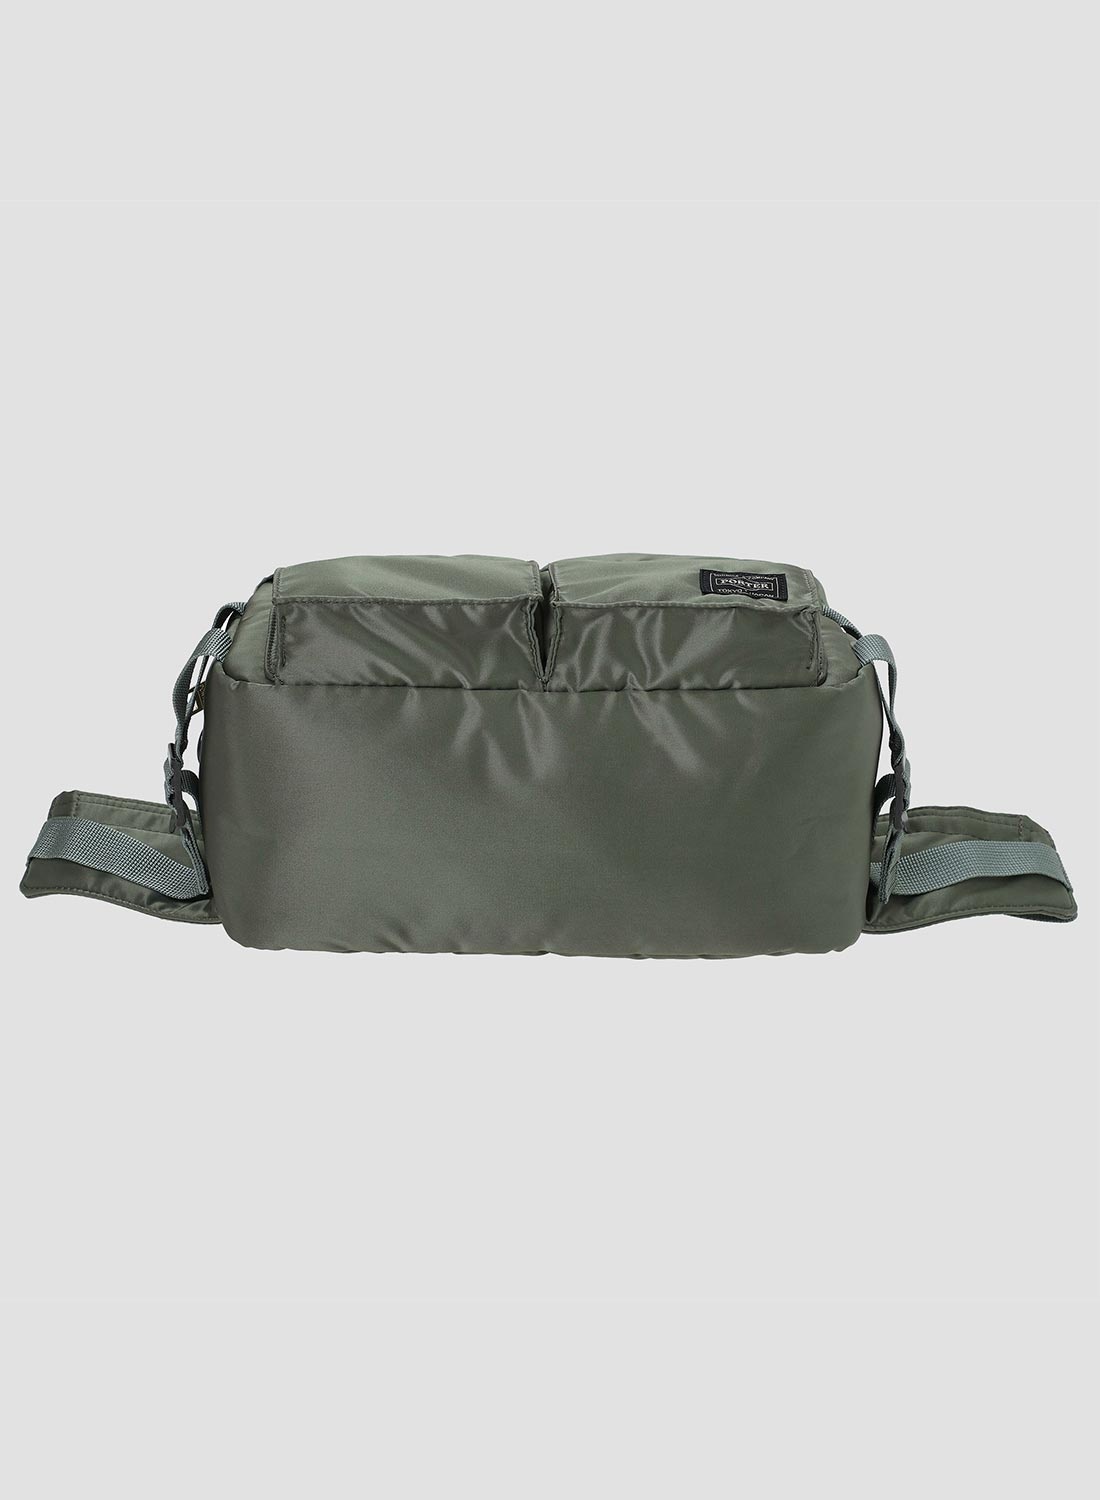 Porter-Yoshida & Co Tanker Waist Bag in Sage Green - 6